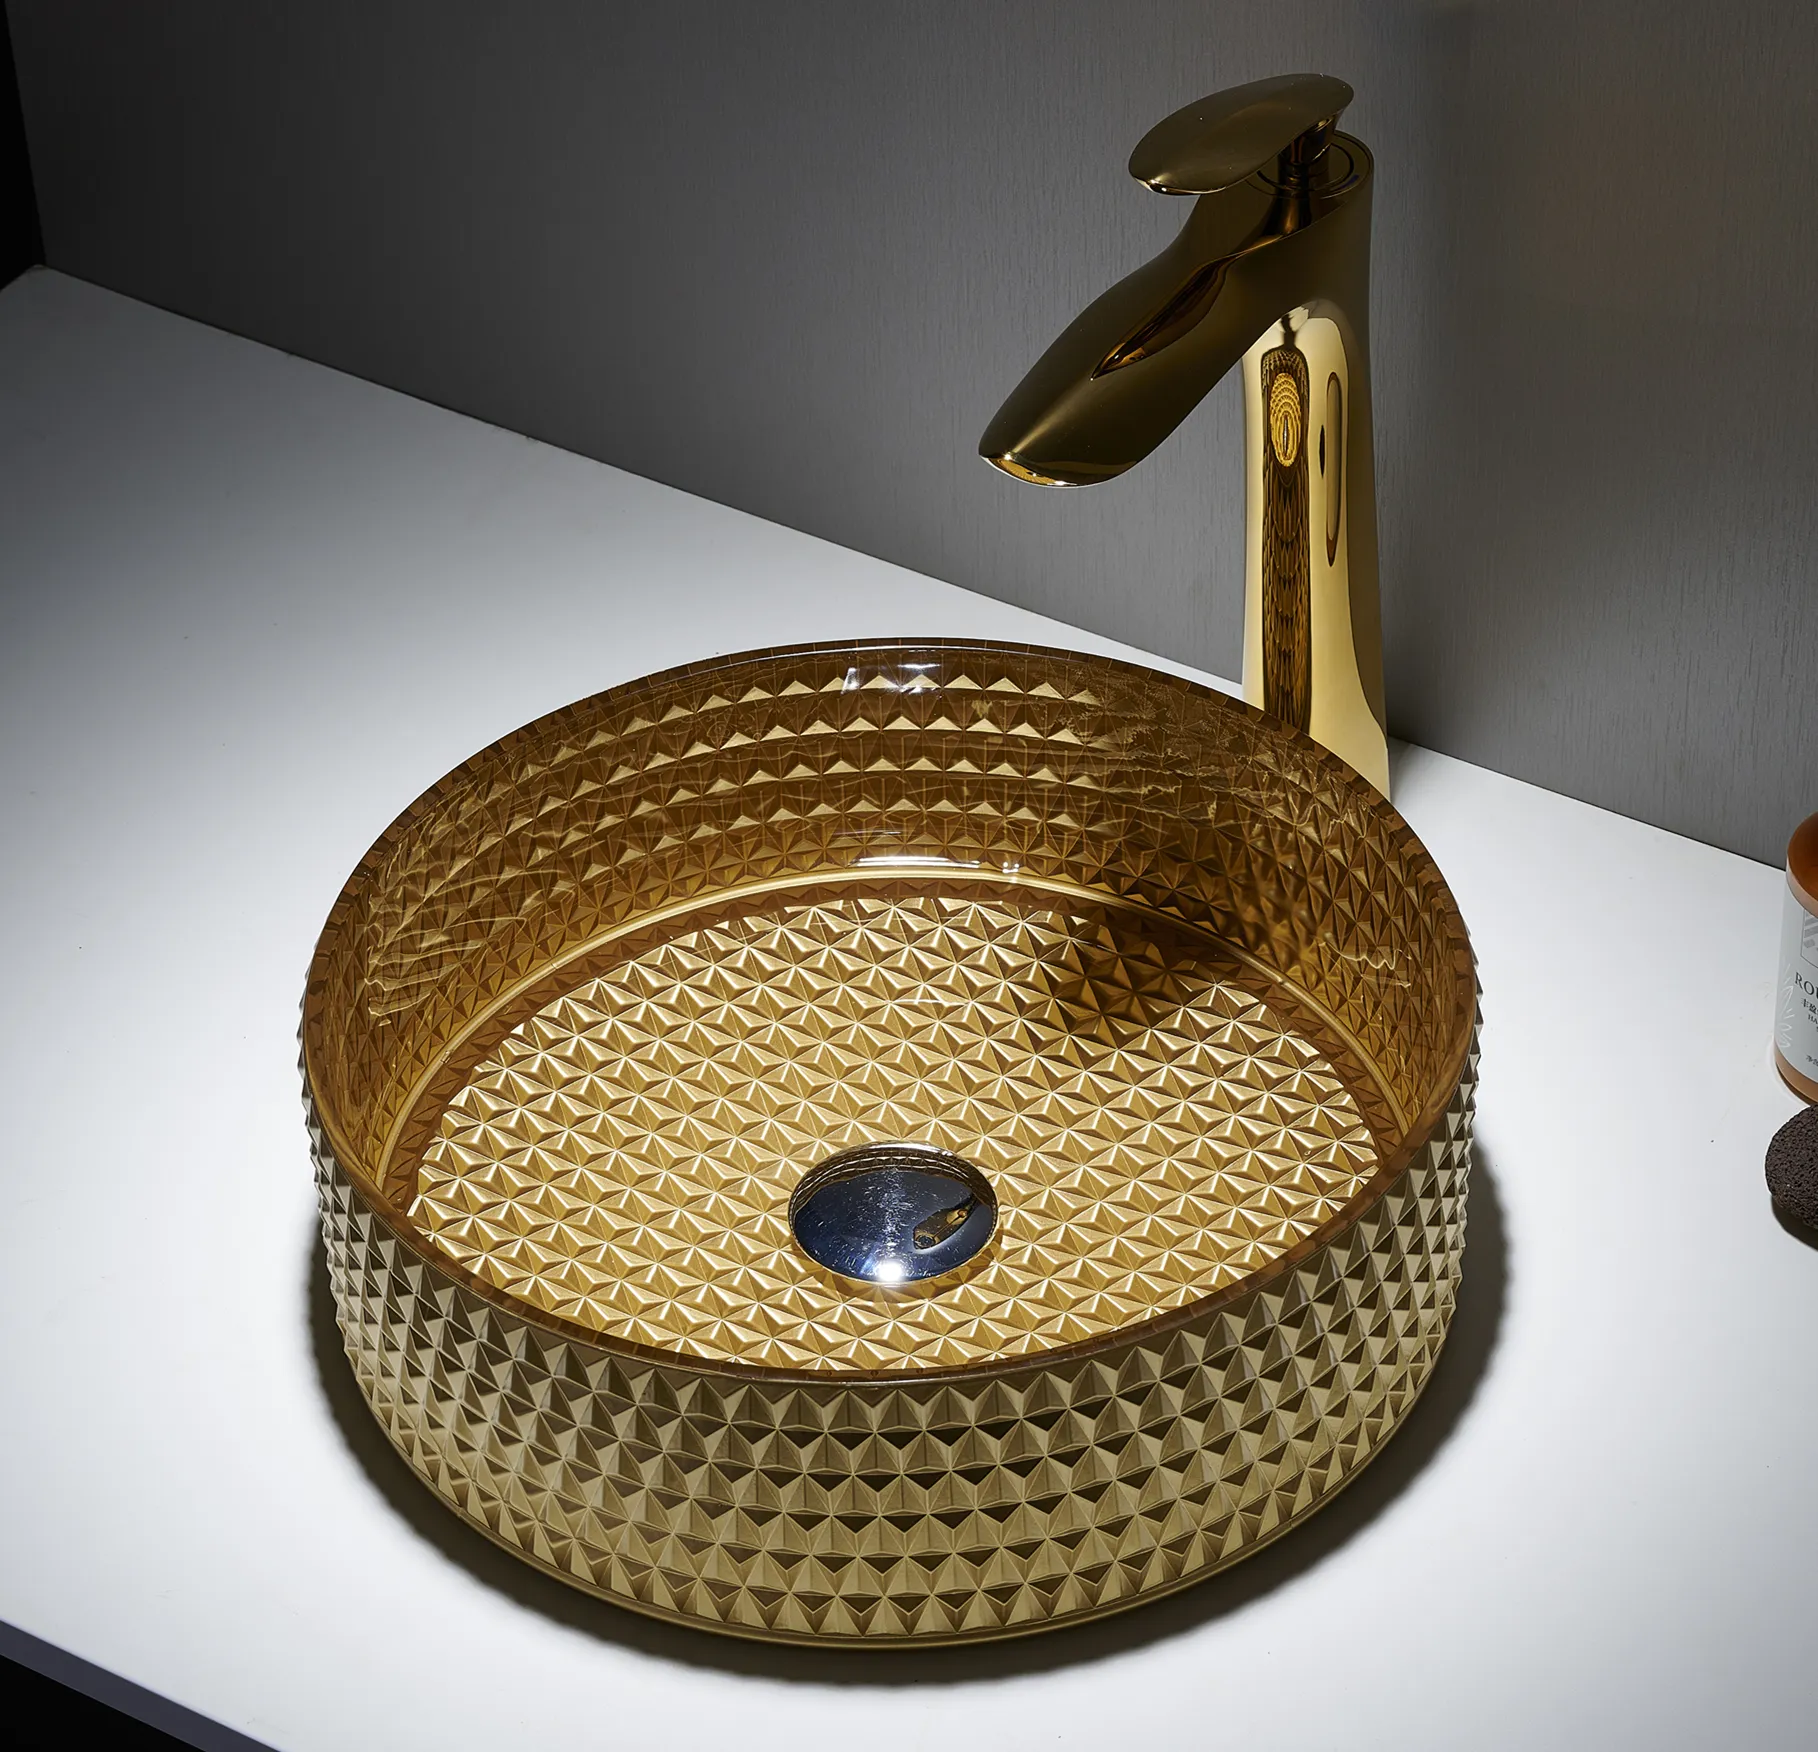 Diamond Round Art Bowl Basins Decor Glass bathroom Glass Counter Top Face Washbasin Clear Gold Bathroom Sink